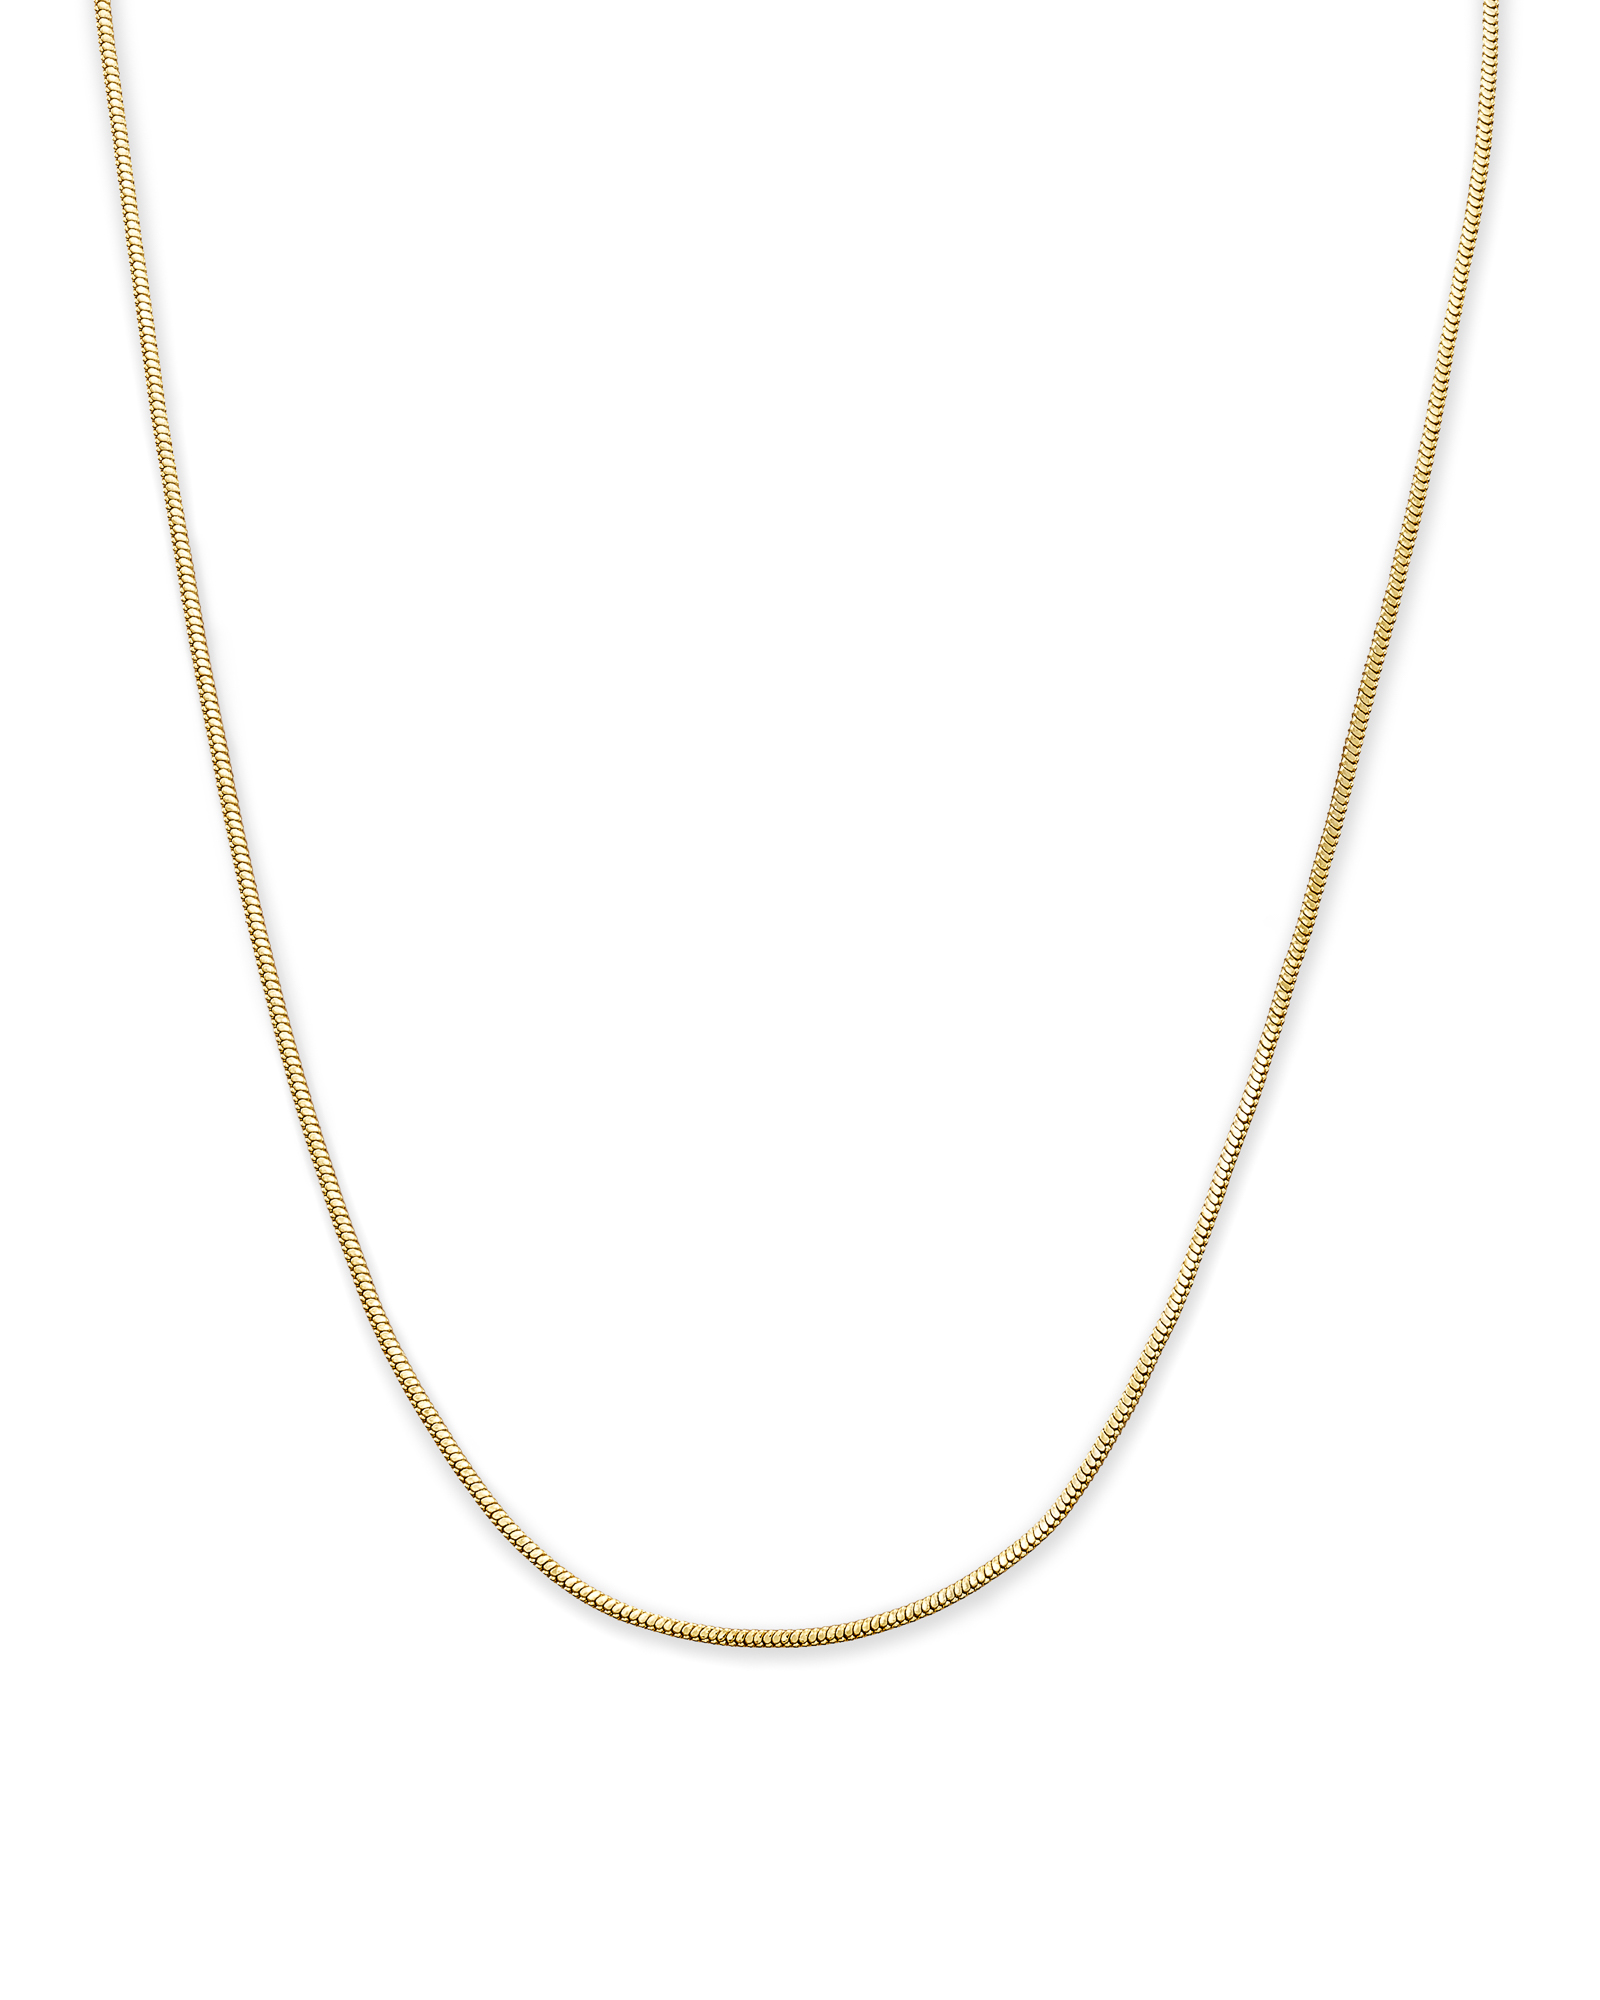 Kendra Scott Sami Herringbone 14K Gold Over Brass Statement Necklace -  Dichroic Glass